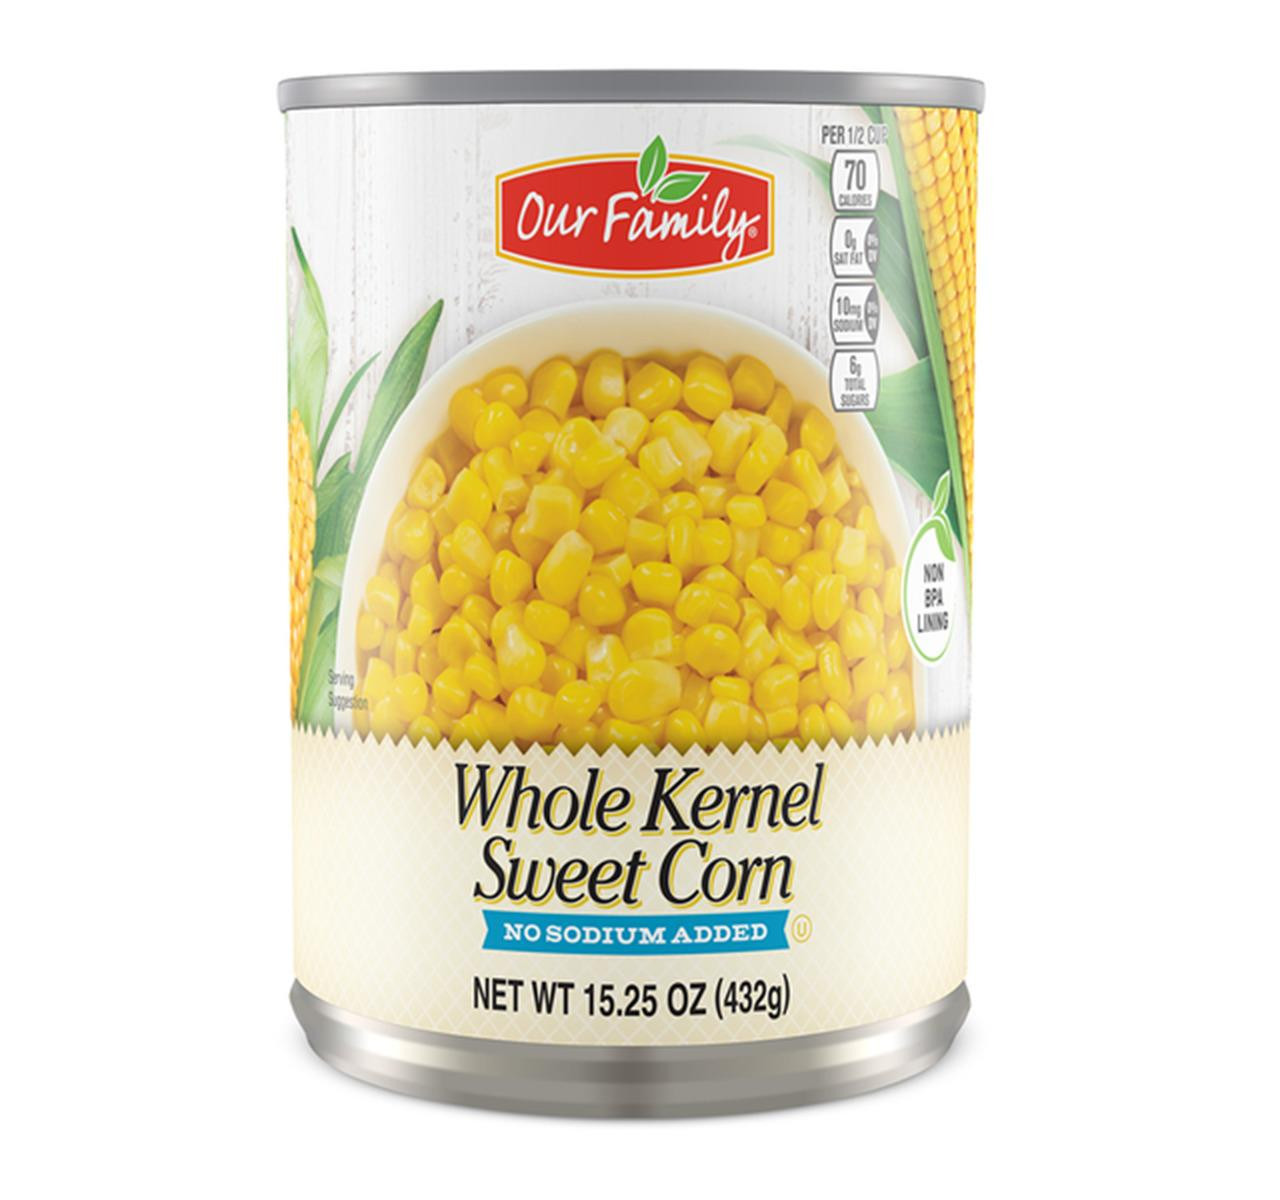 Canned Sweet Whole Kernel Corn - No Salt Added